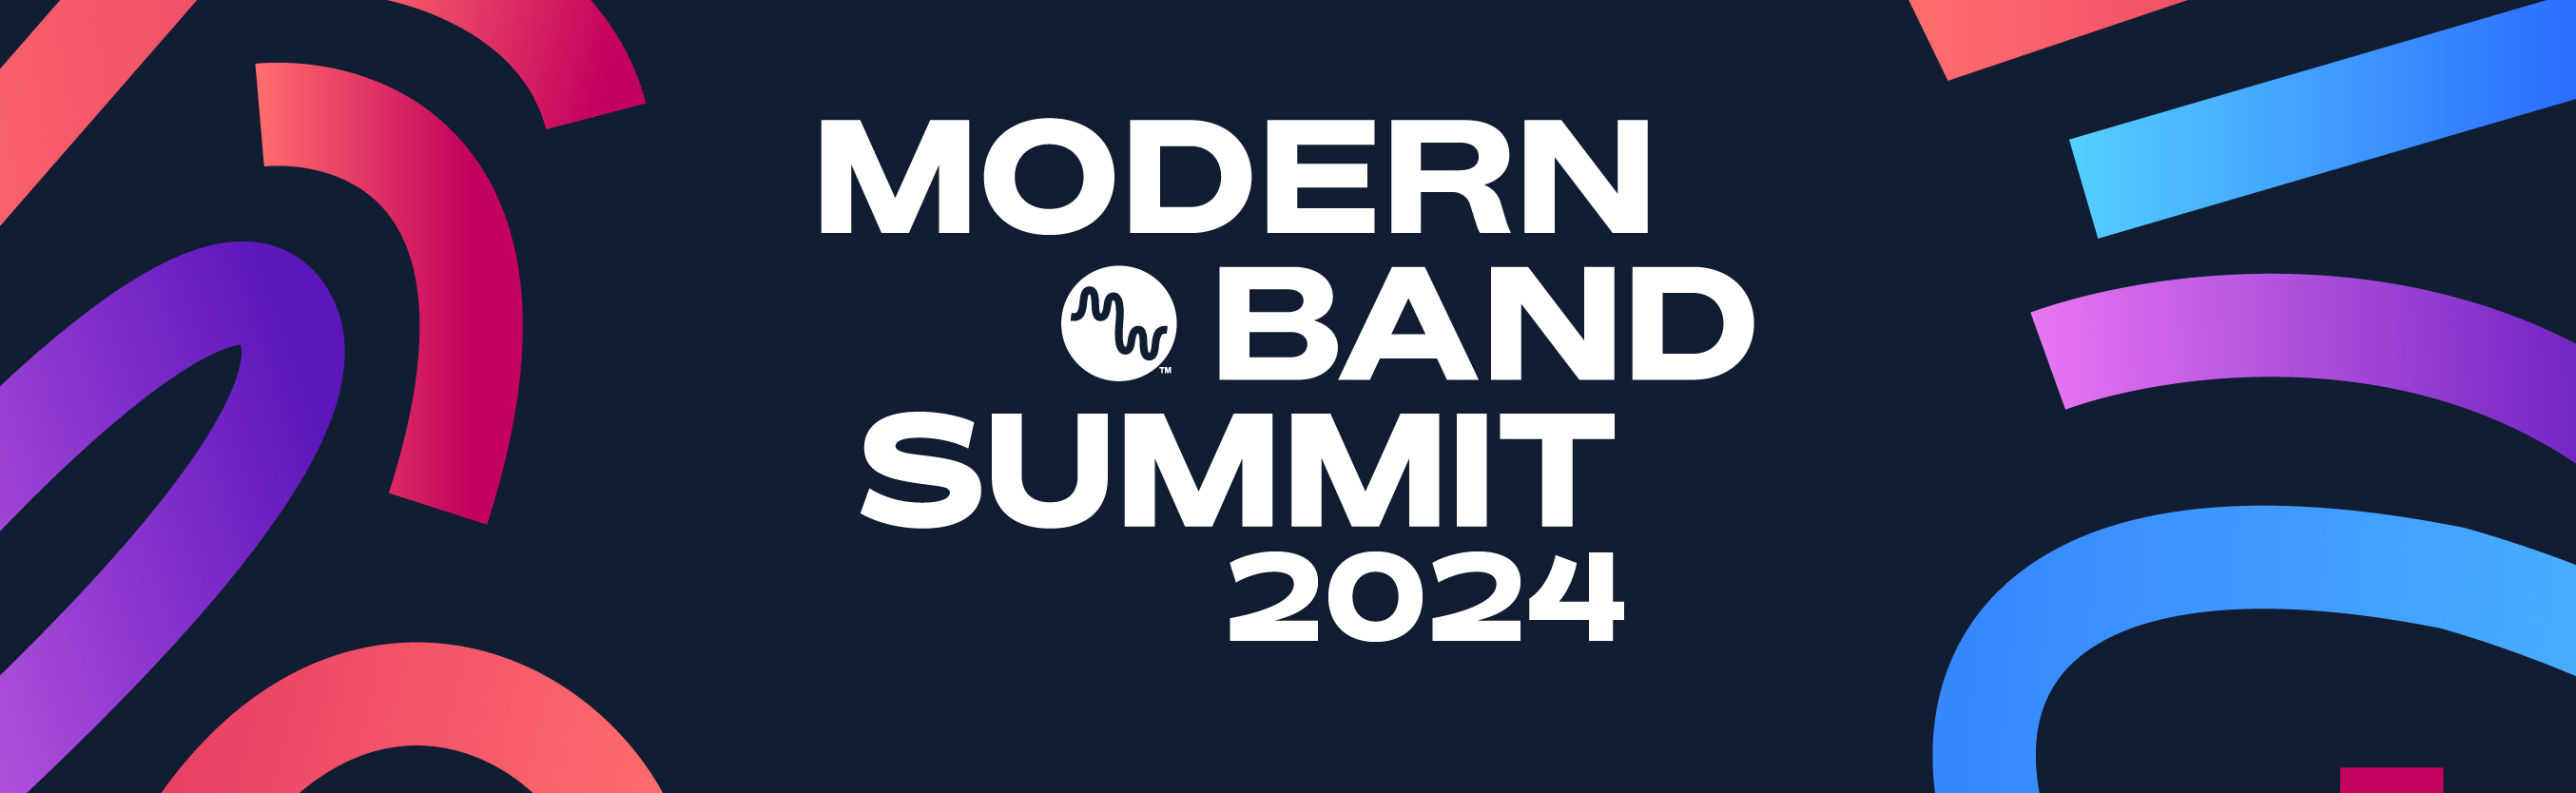 Modern Band Summit 2024